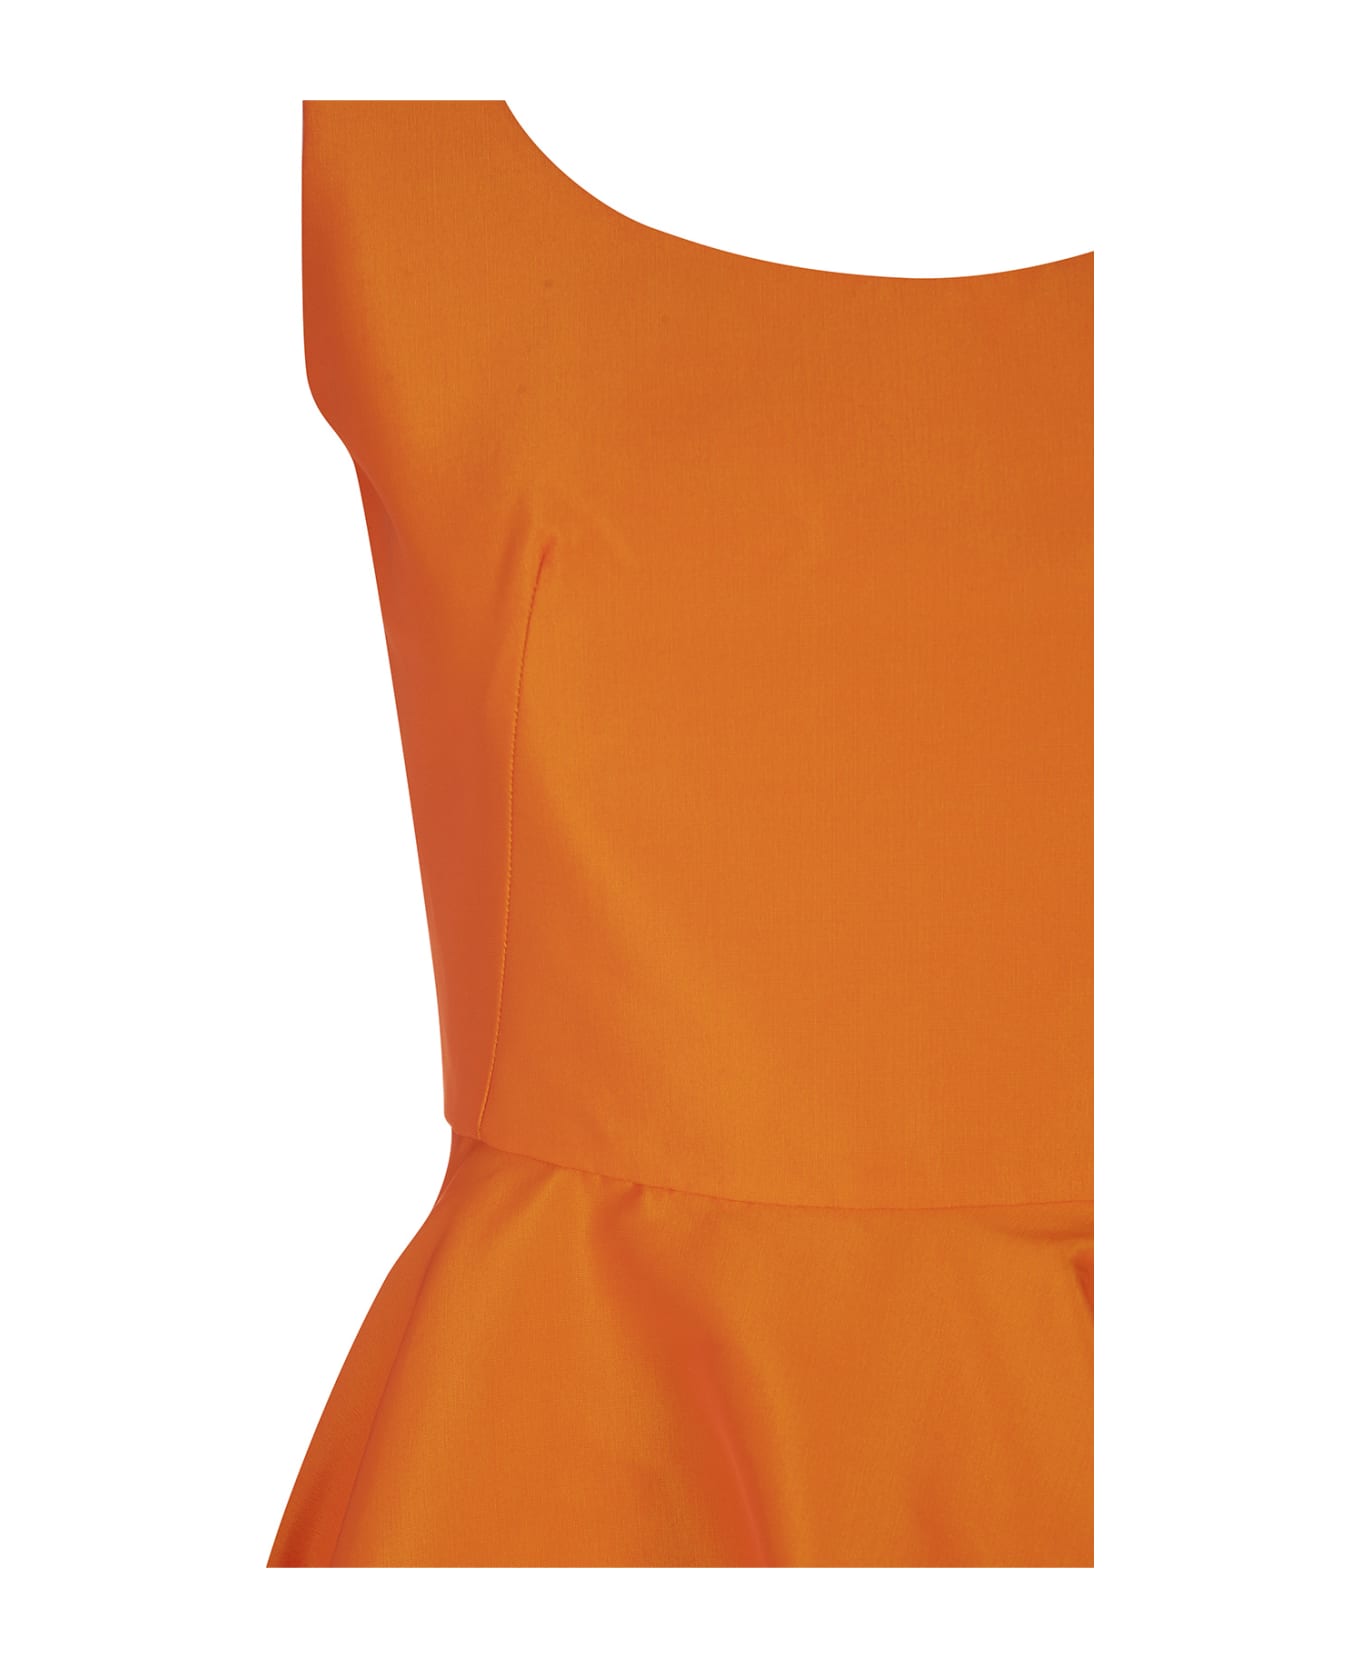 Alexander McQueen Asymmetrical And Draped Dress In Orange - Arancione